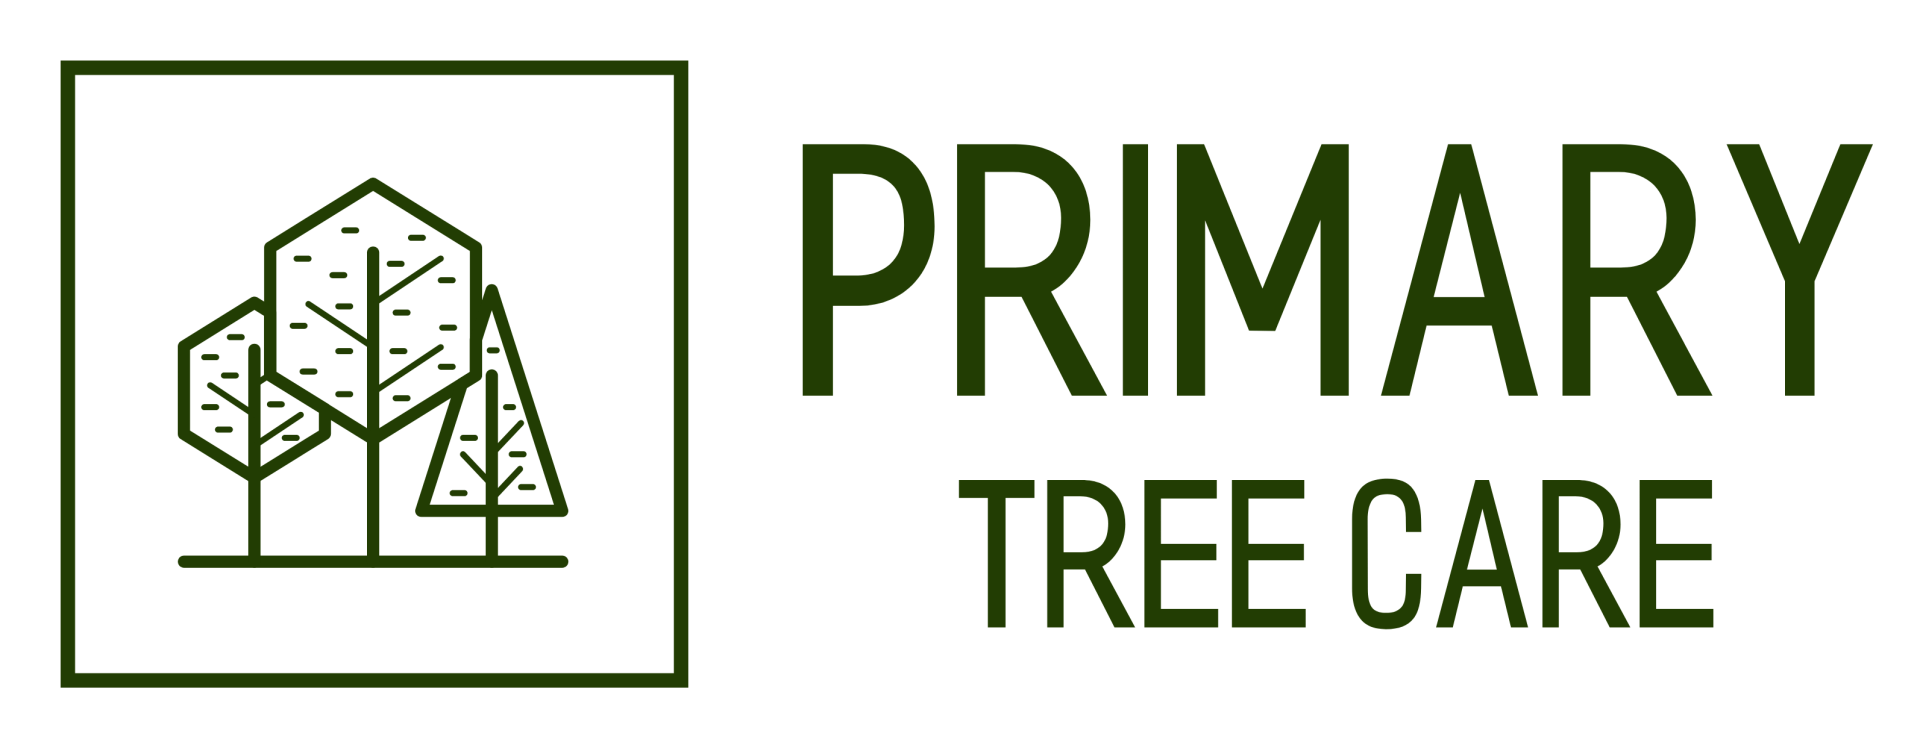 Primary Tree Care logo, green